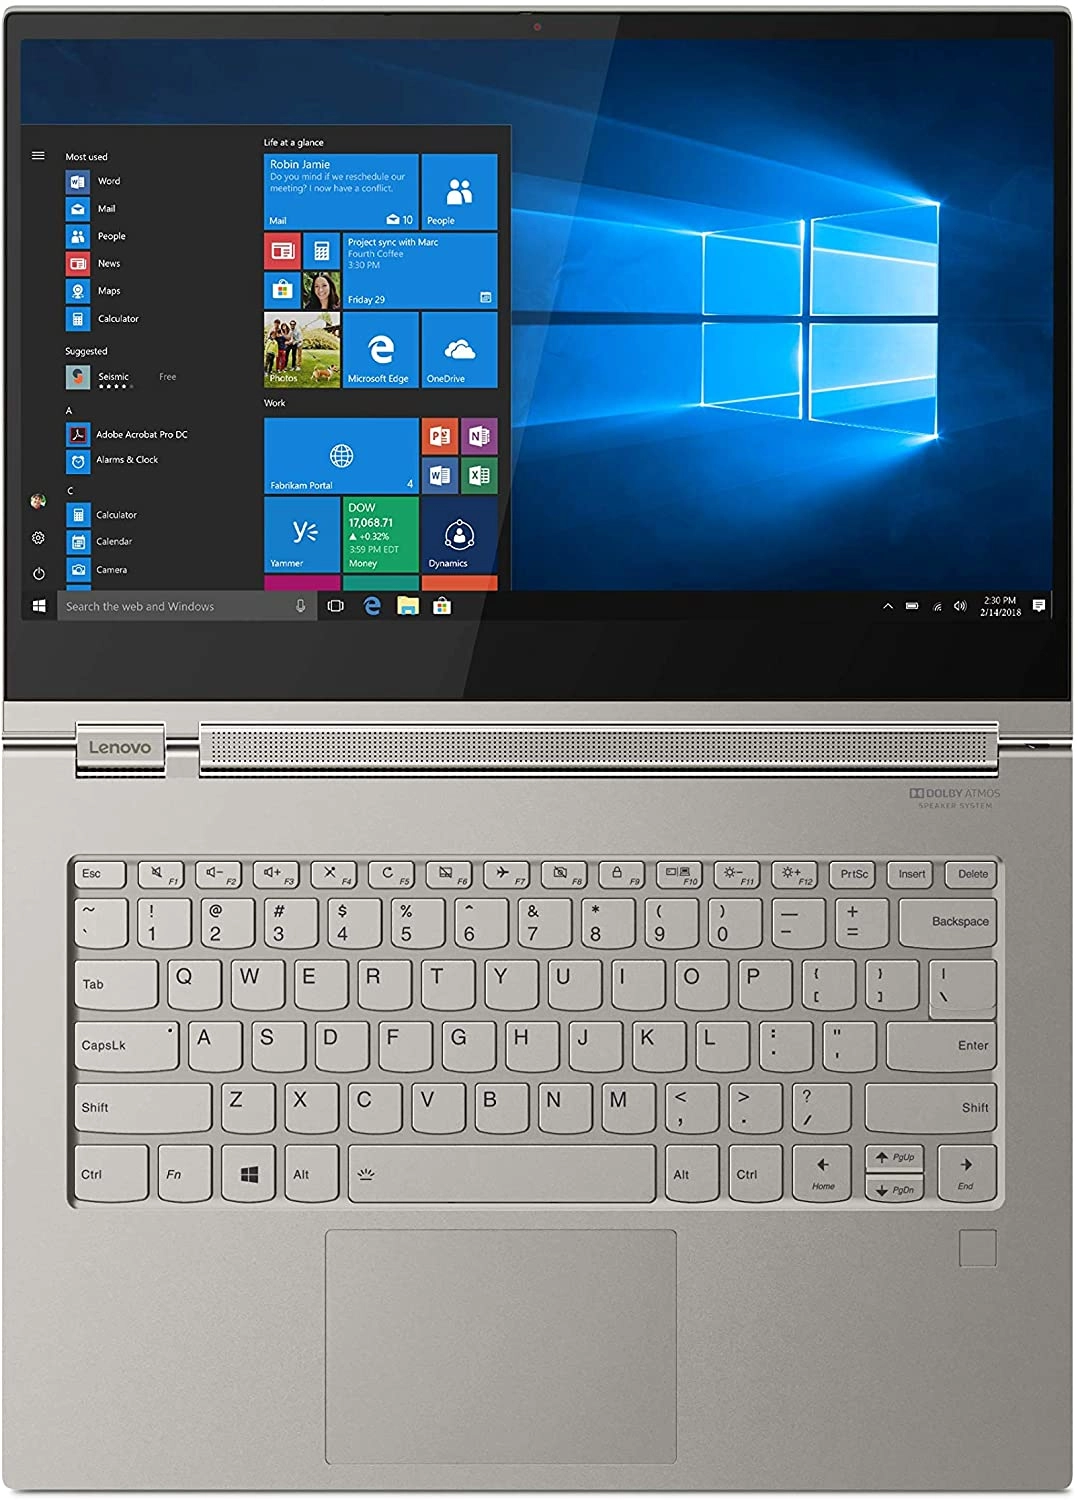 Lenovo Yoga C930-13IKB laptop image